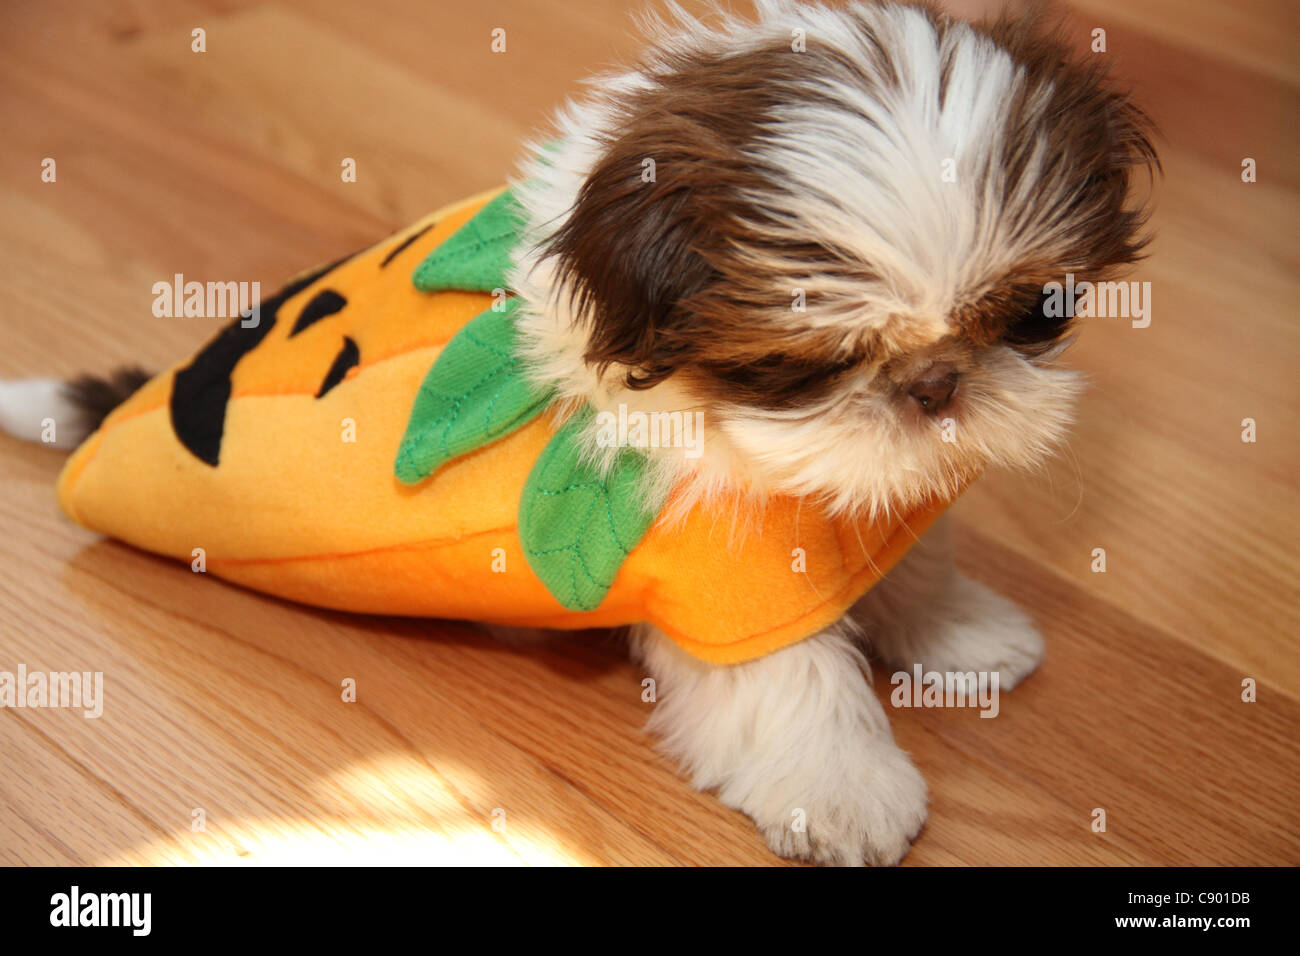 12 week old Shih tzu Shiatsu dog parading around with Halloween costume  Stock Photo - Alamy